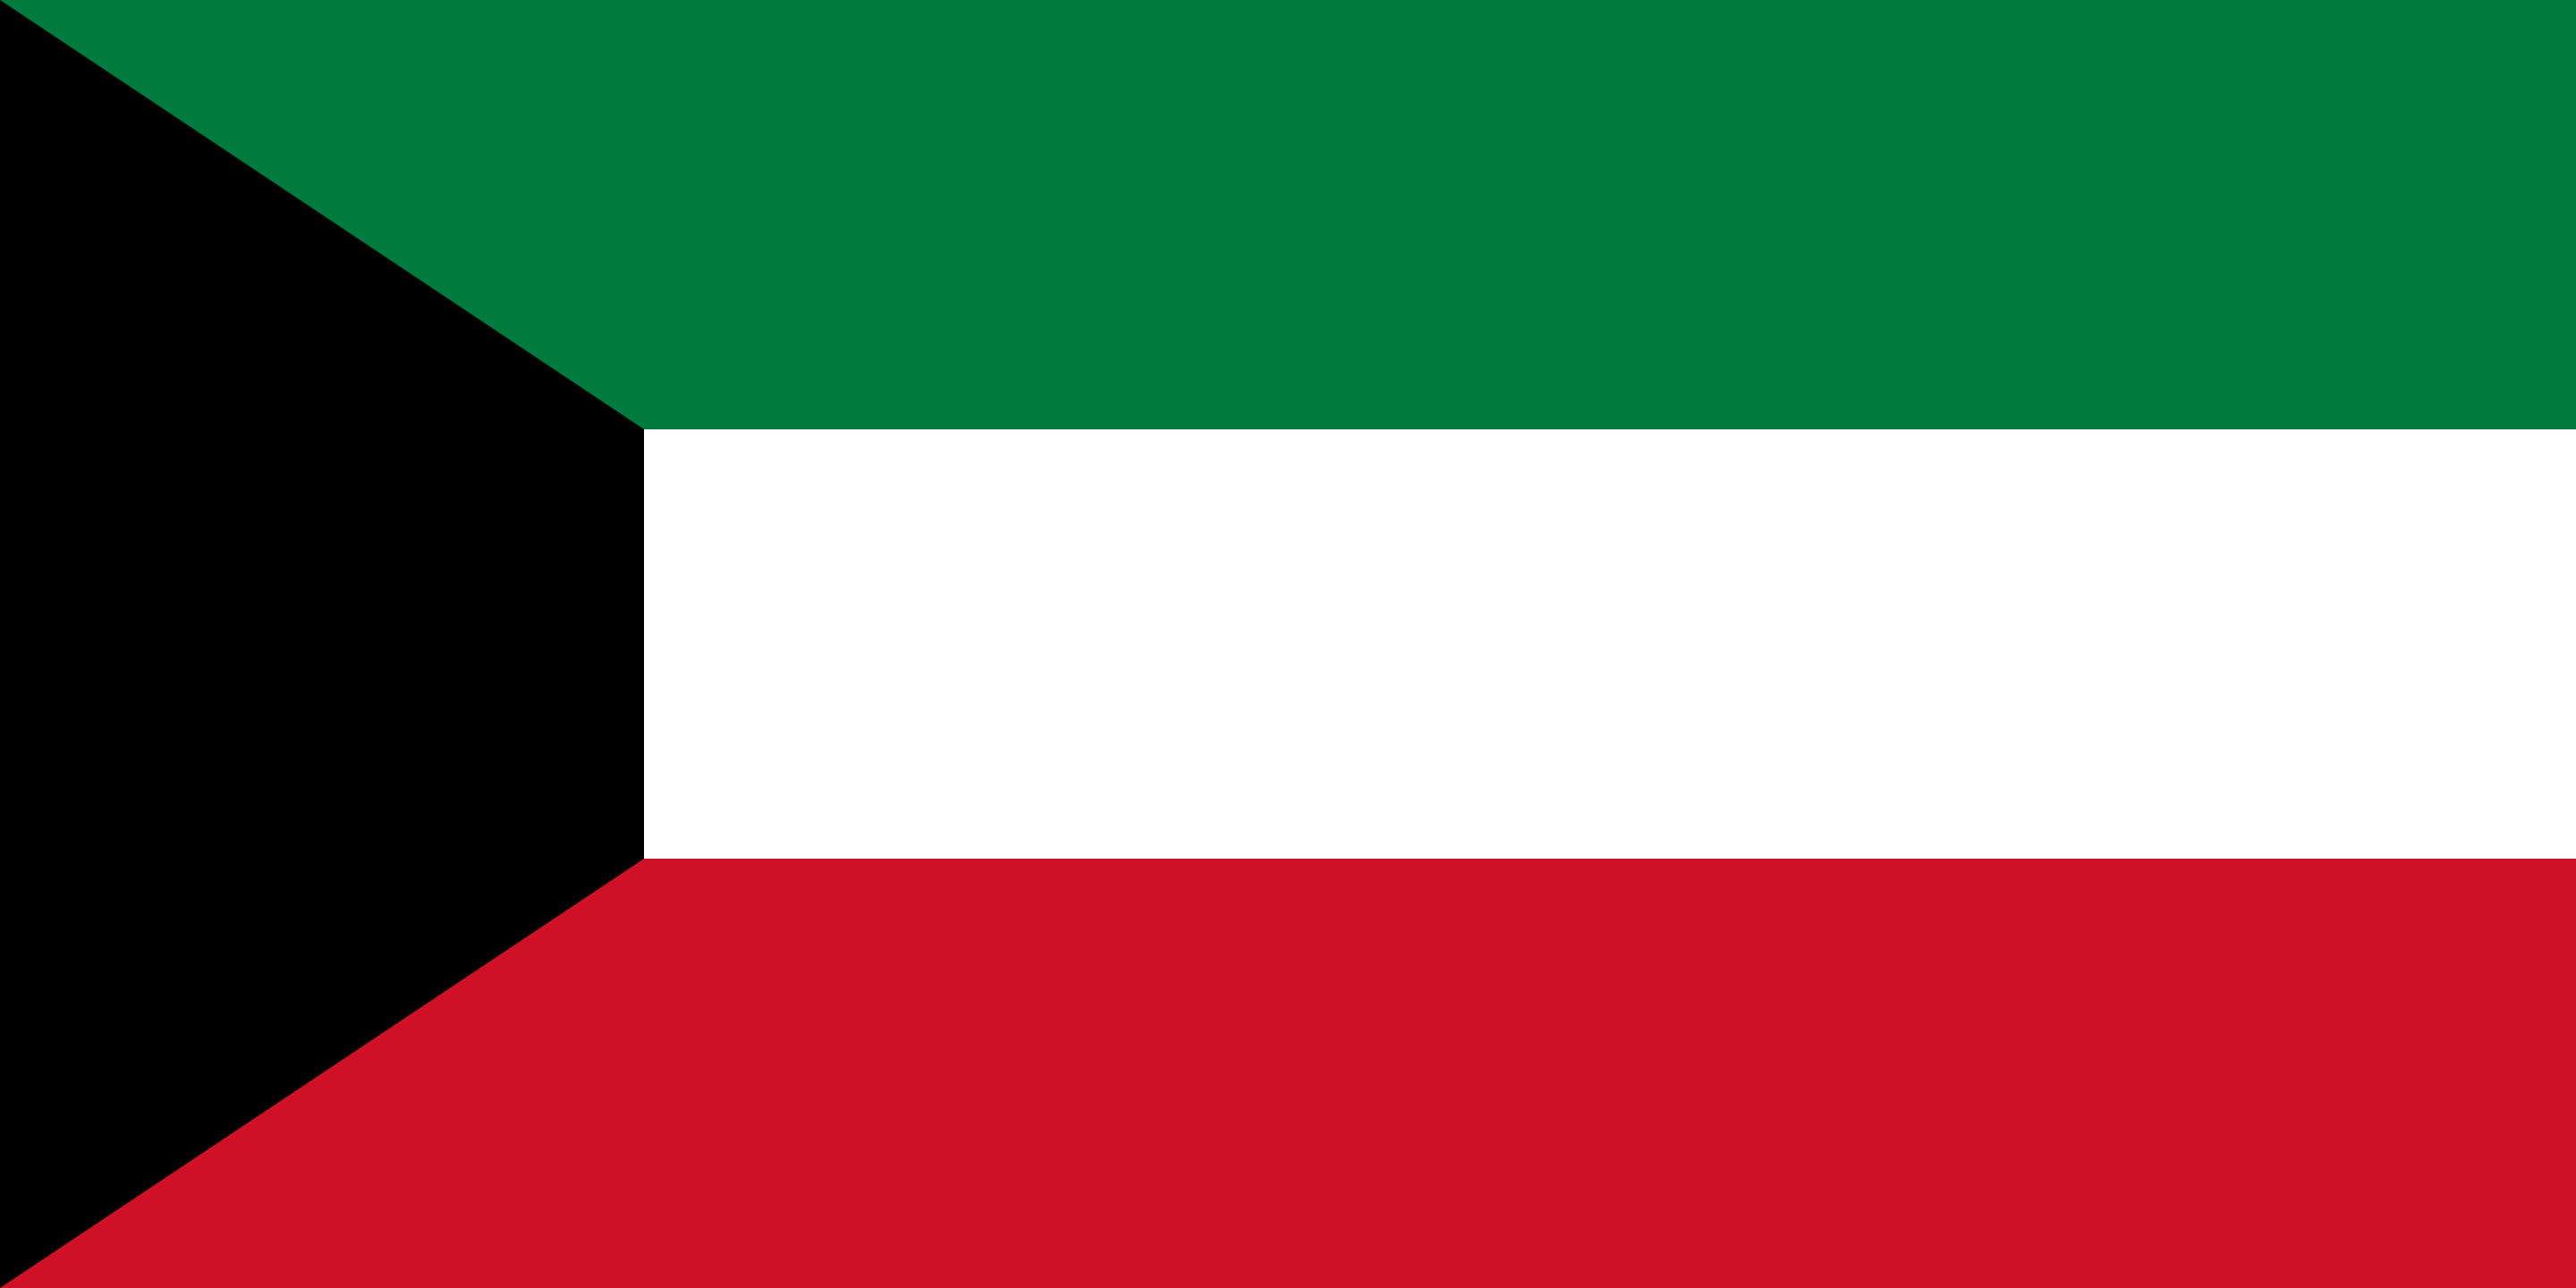 Kuwait Flag - Kuwait Drone Laws